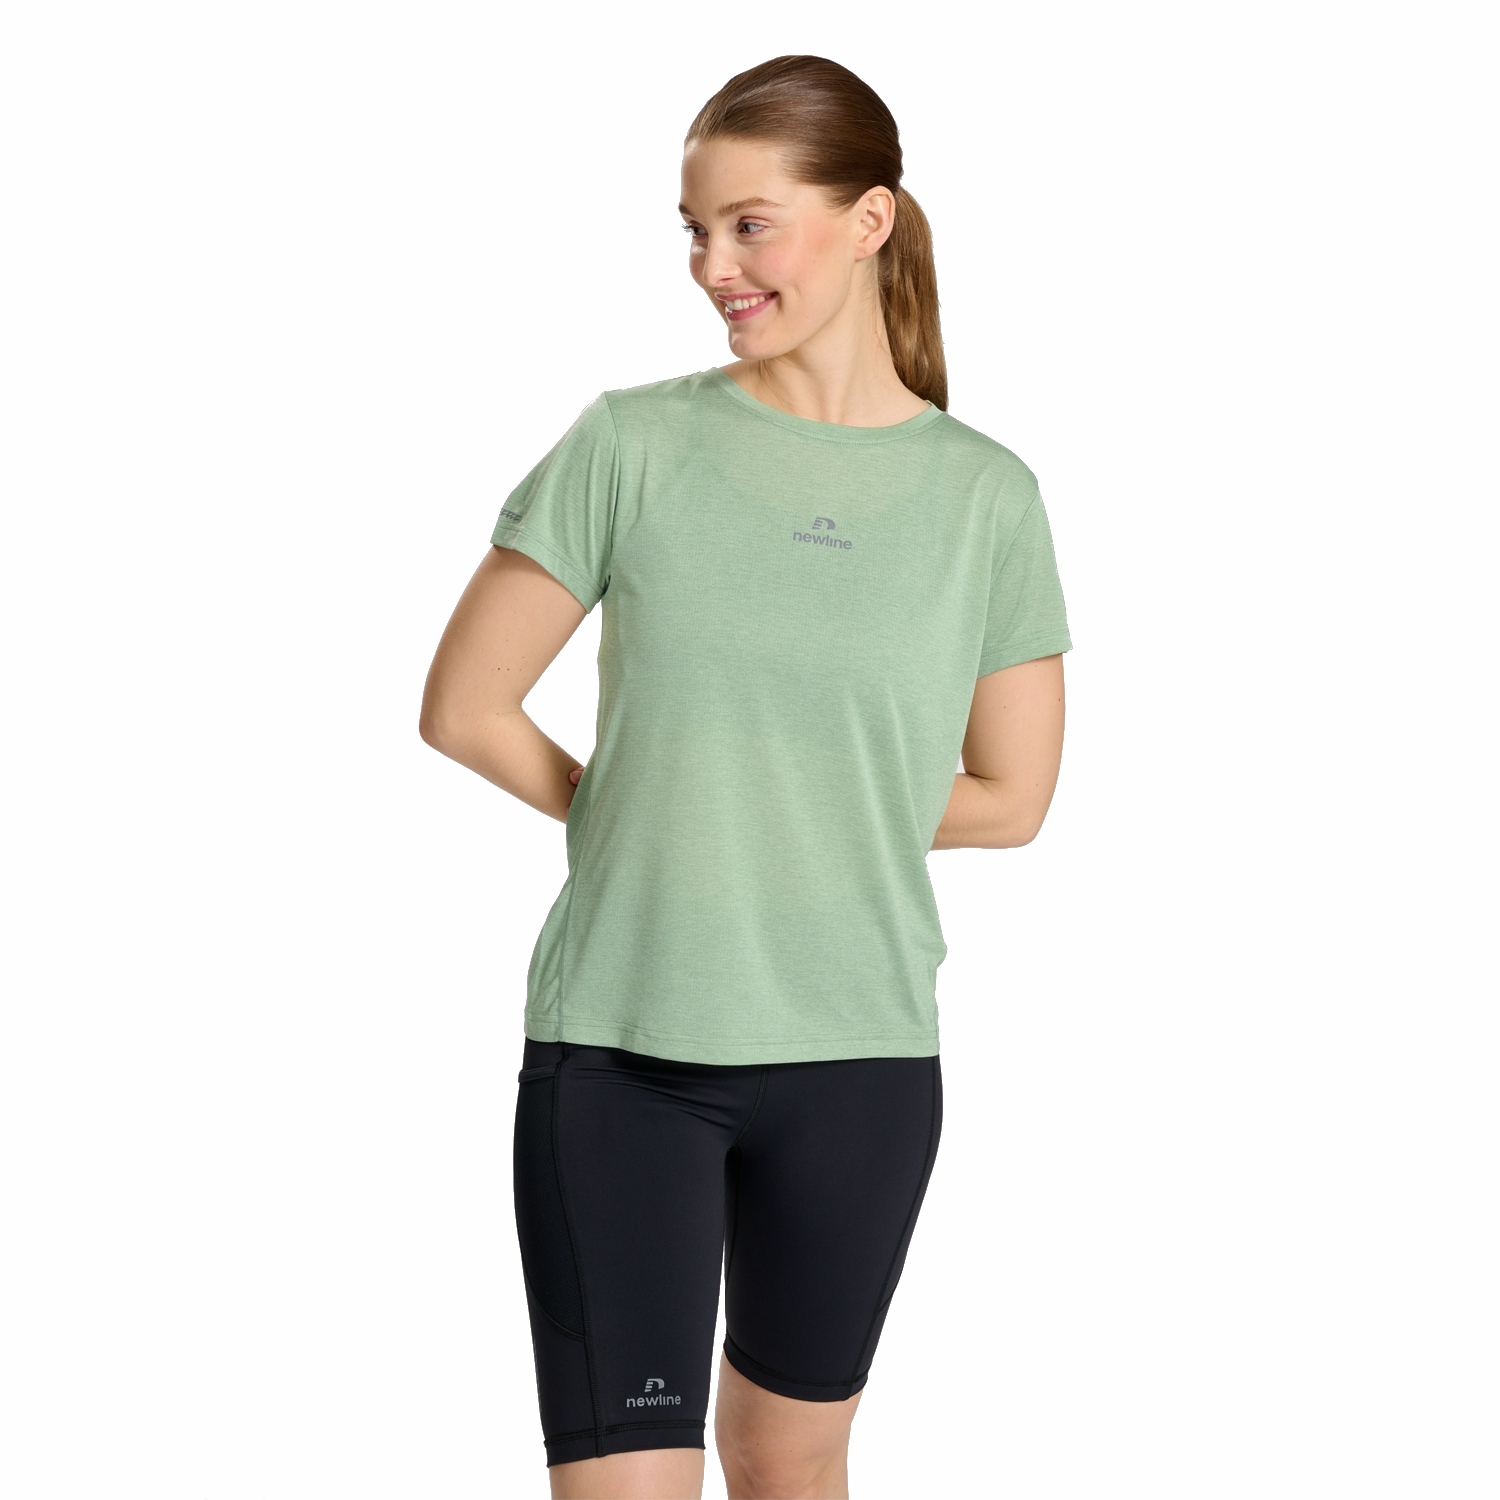 Productfoto van Newline Cleveland Dames T-Shirt - green bay melange